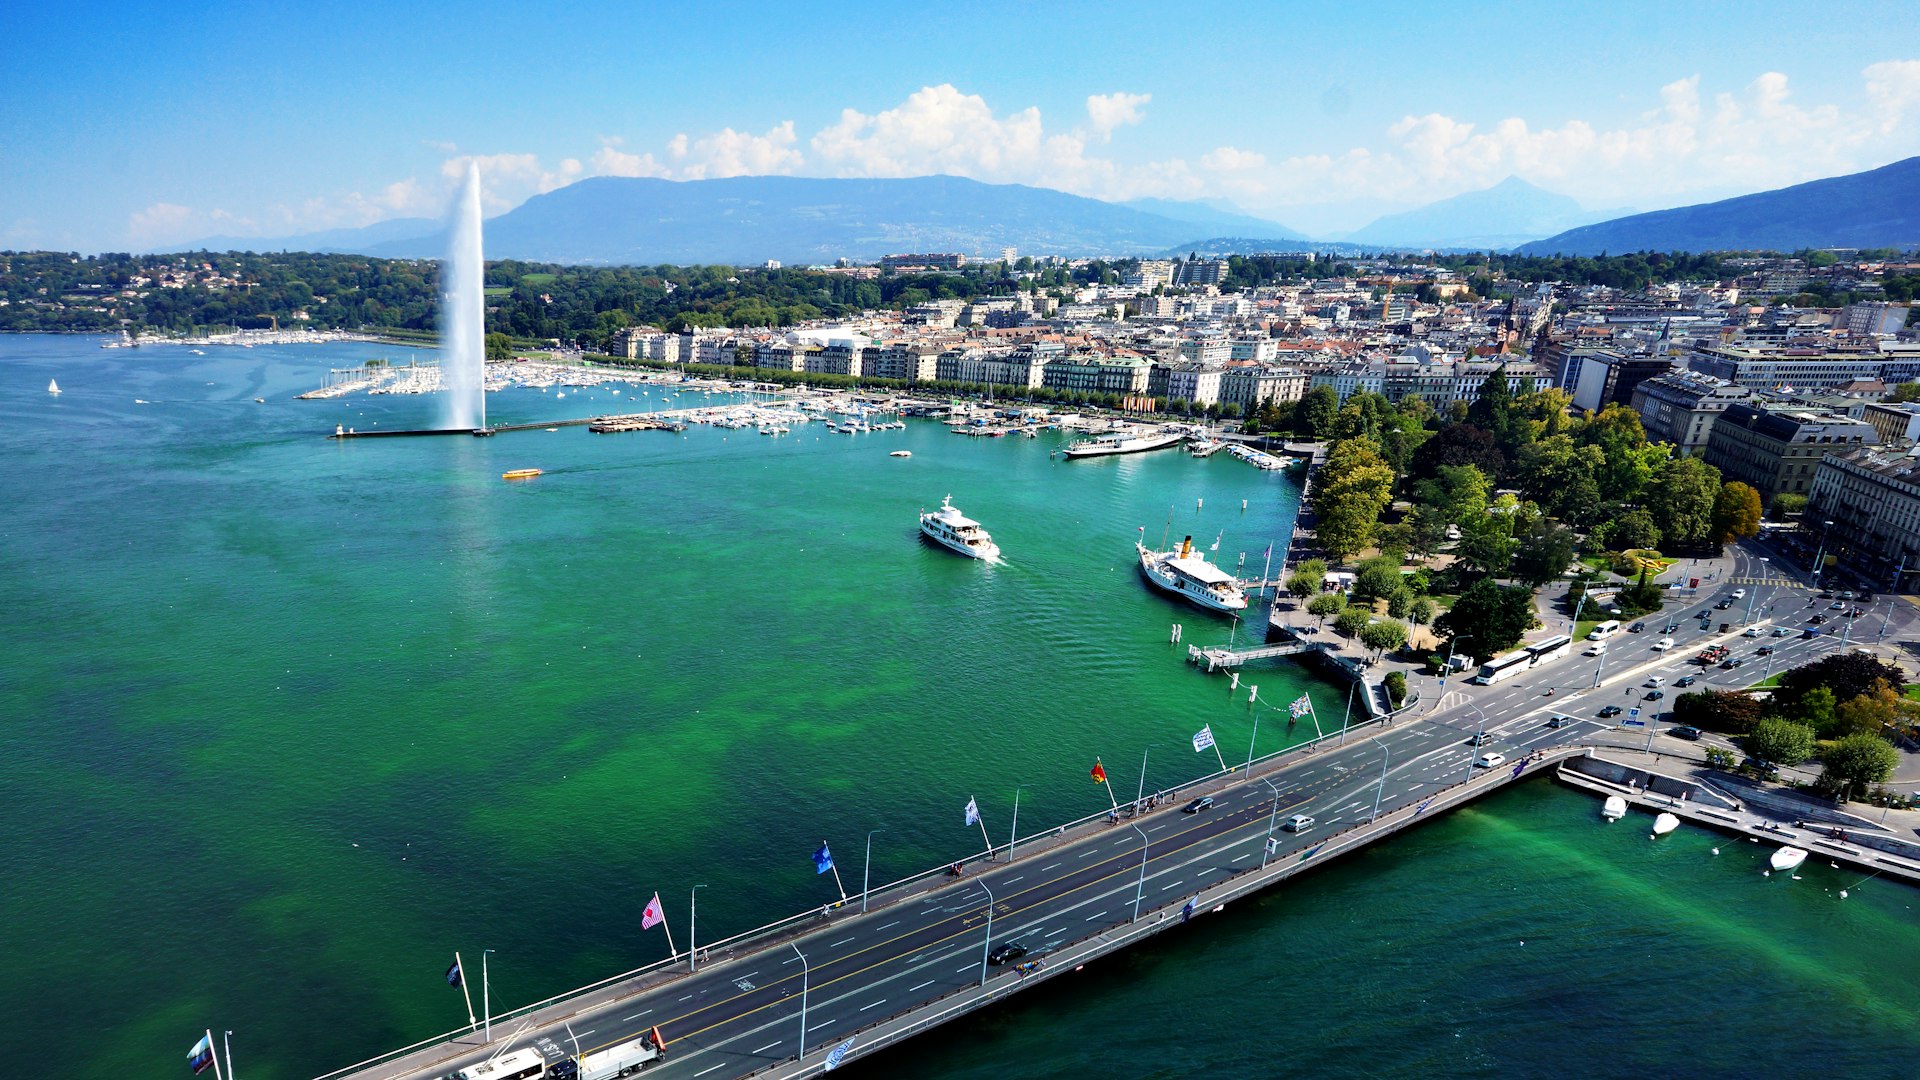 A bridge crosses a section of Lake Geneva, Switzerland